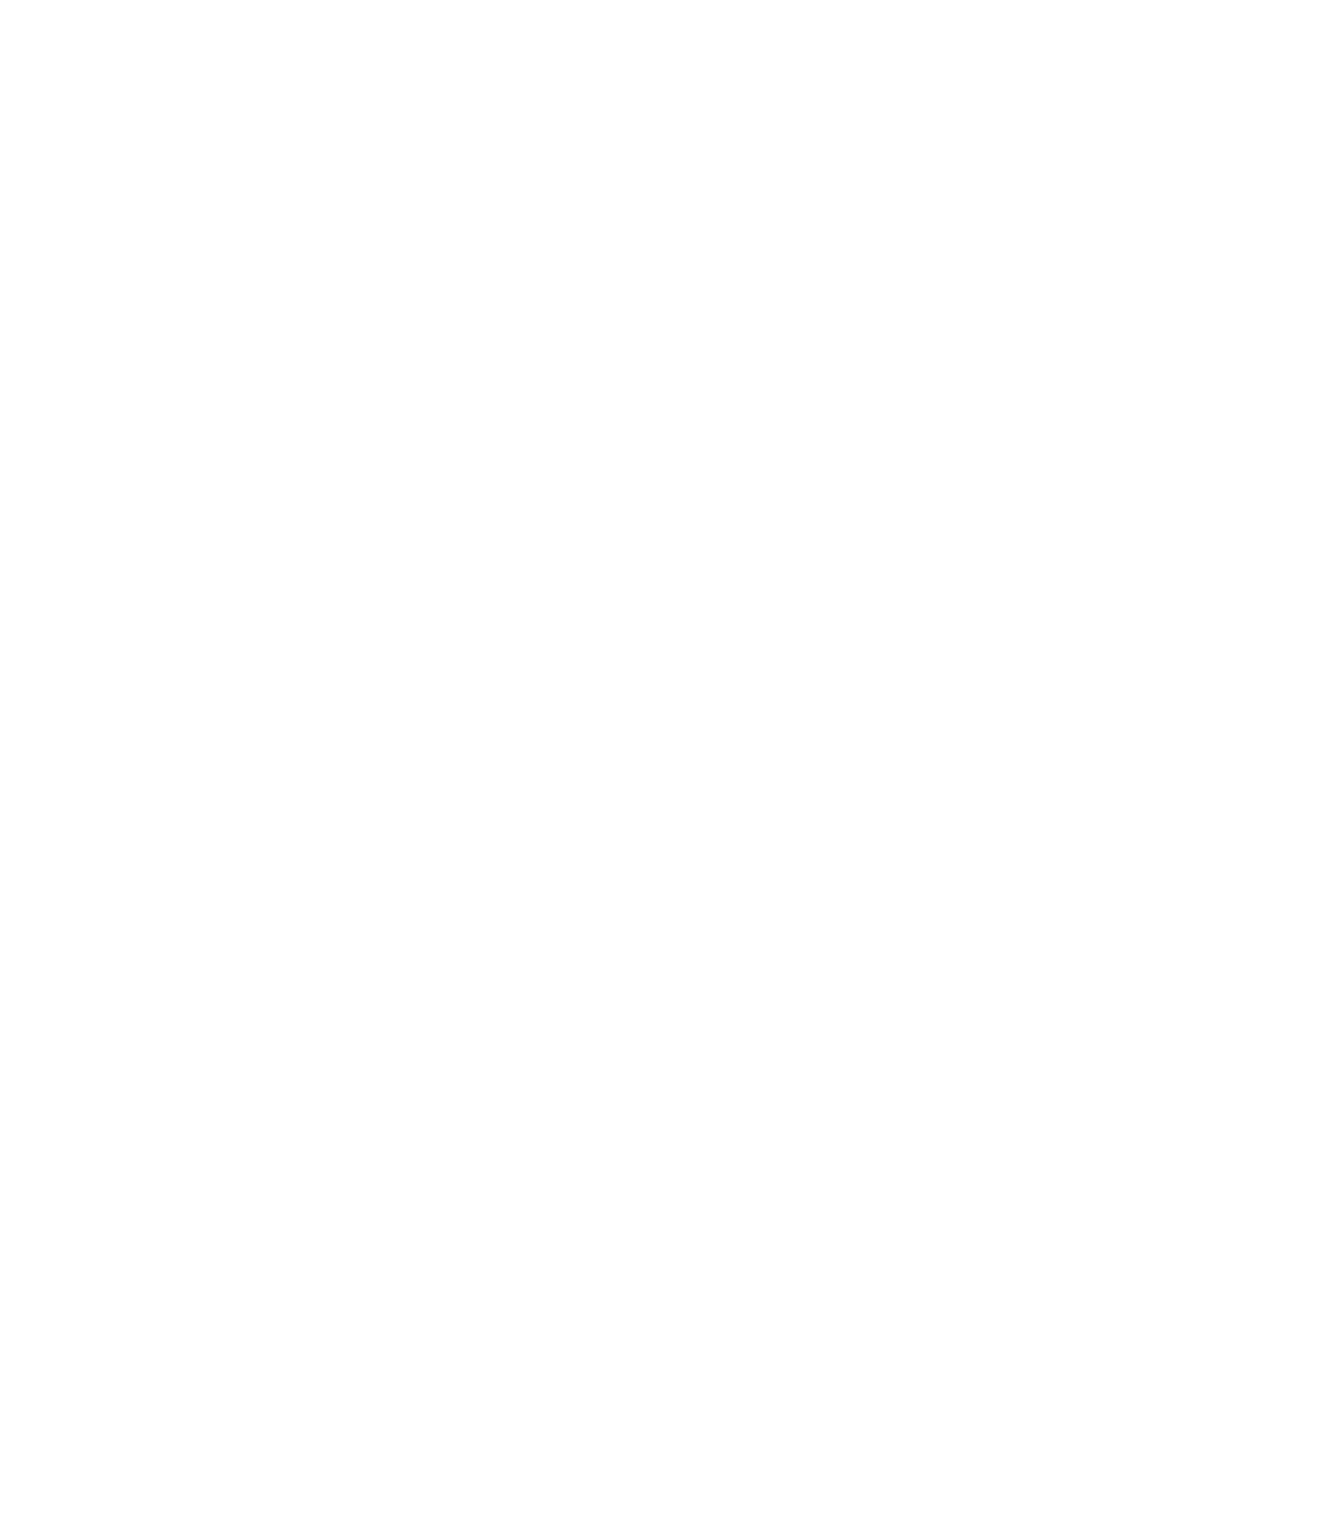 Riyadh Cement Company logo pour fonds sombres (PNG transparent)